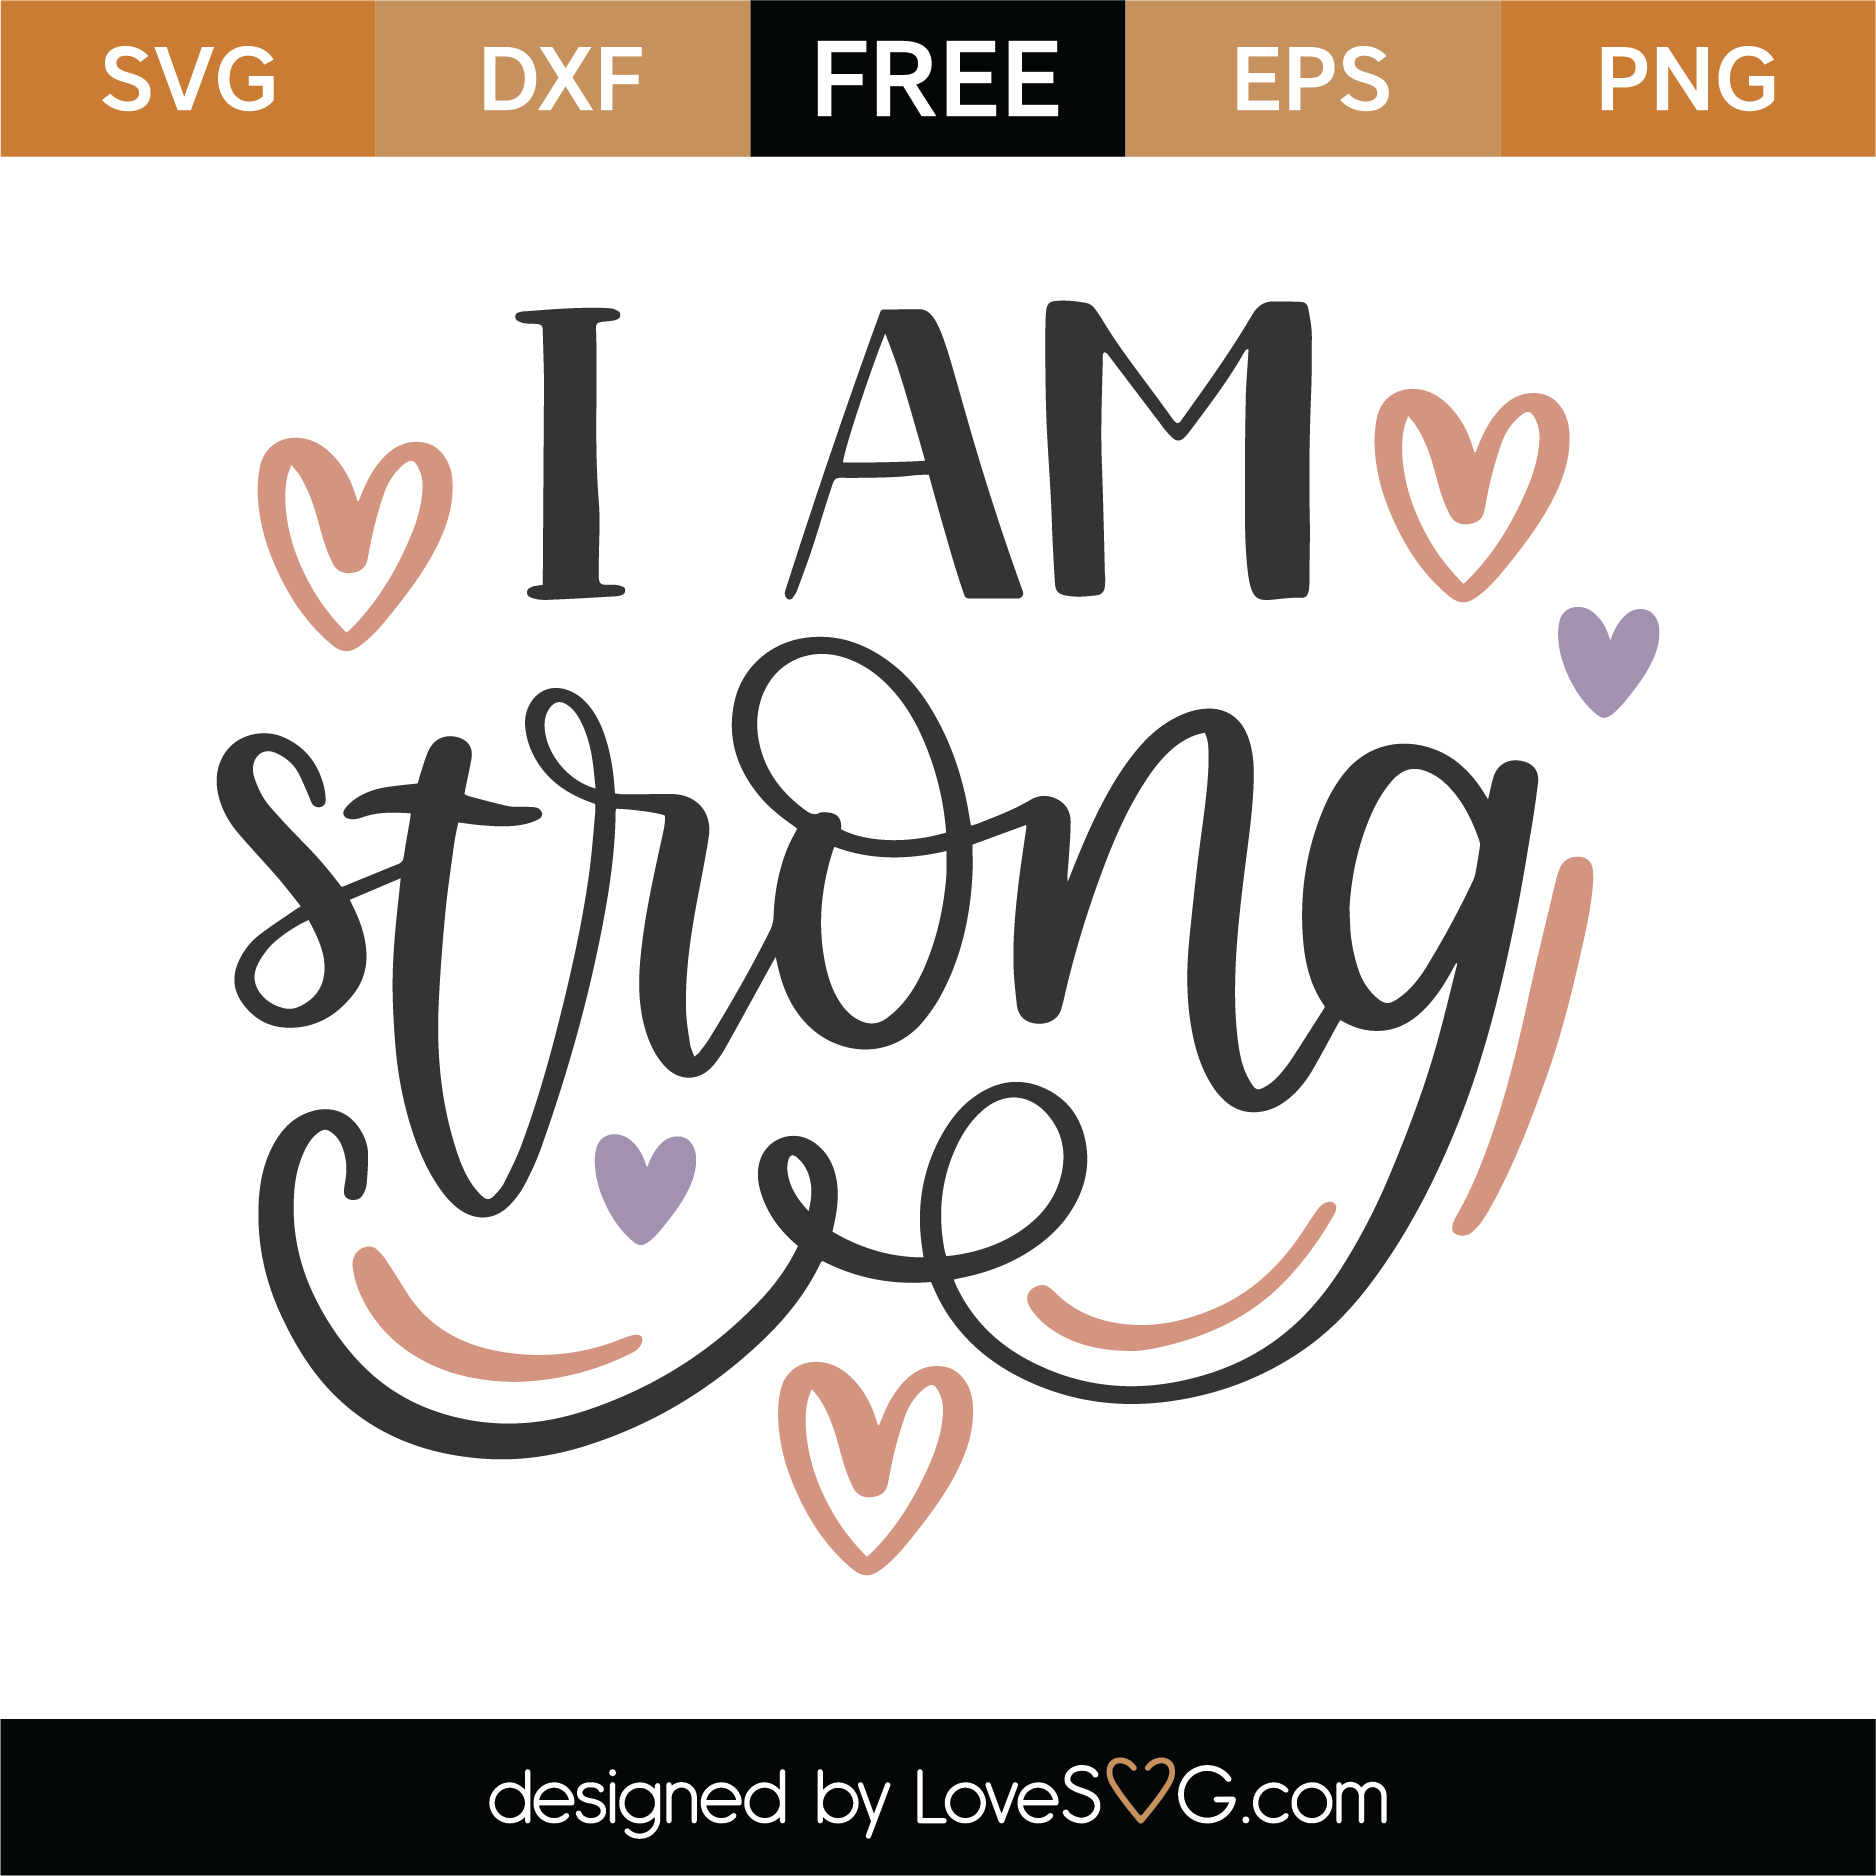 Download Free I Am Strong SVG Cut File | Lovesvg.com